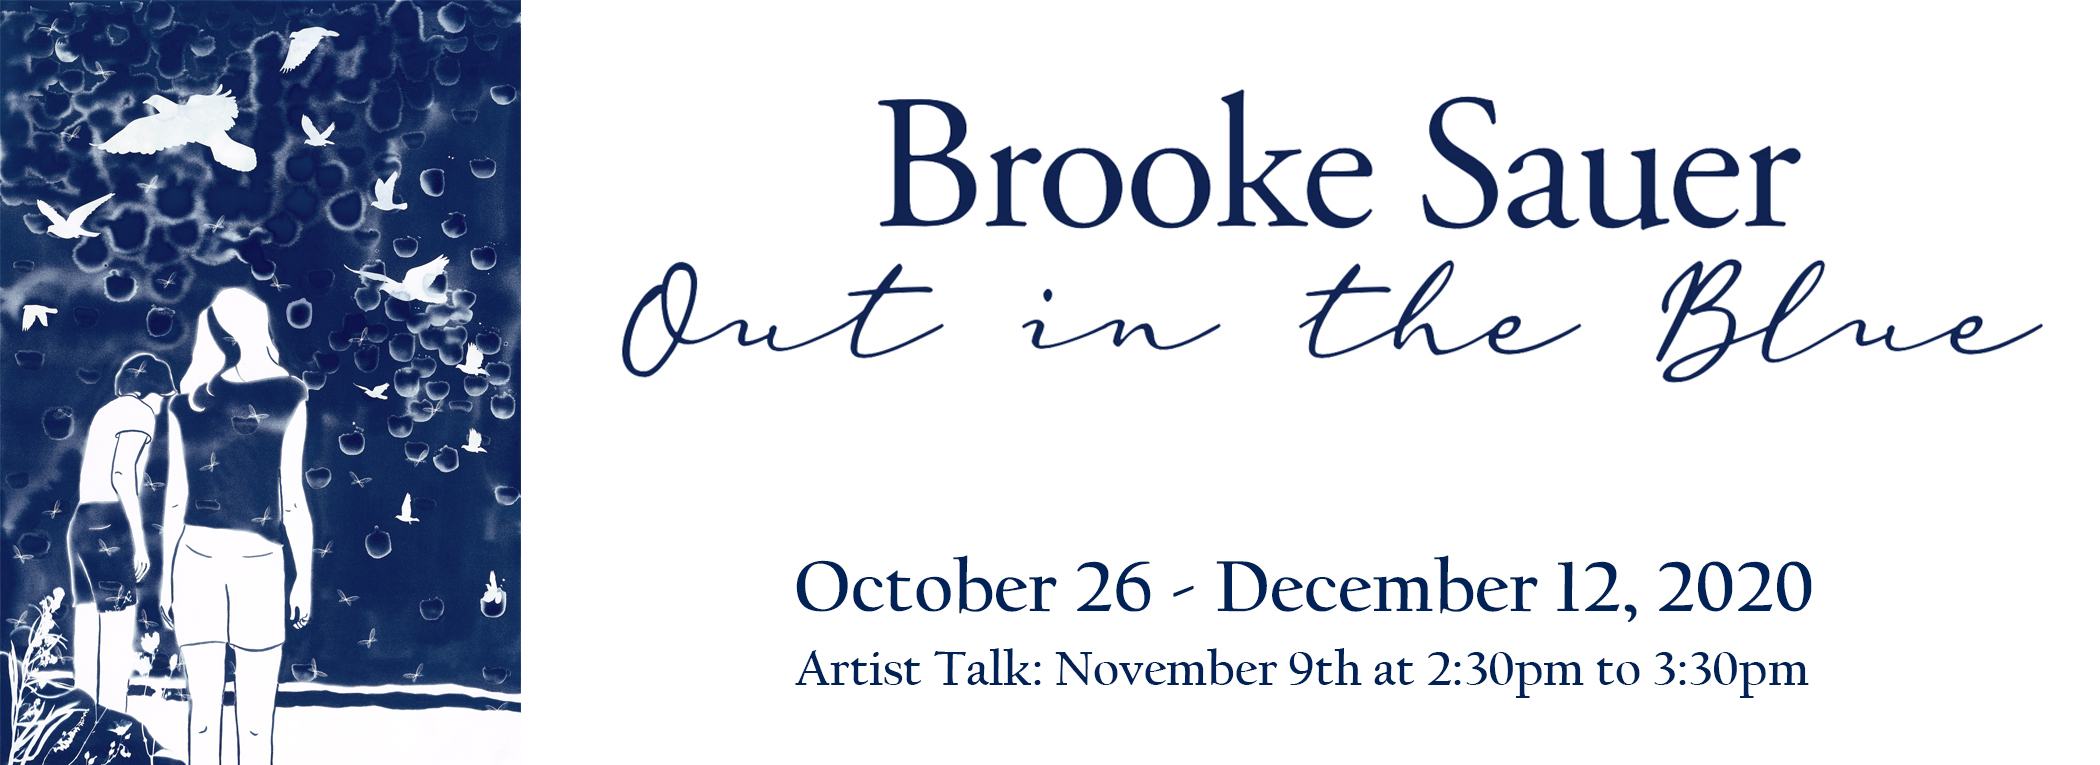 Brooke Sauer Virtual Exhibition